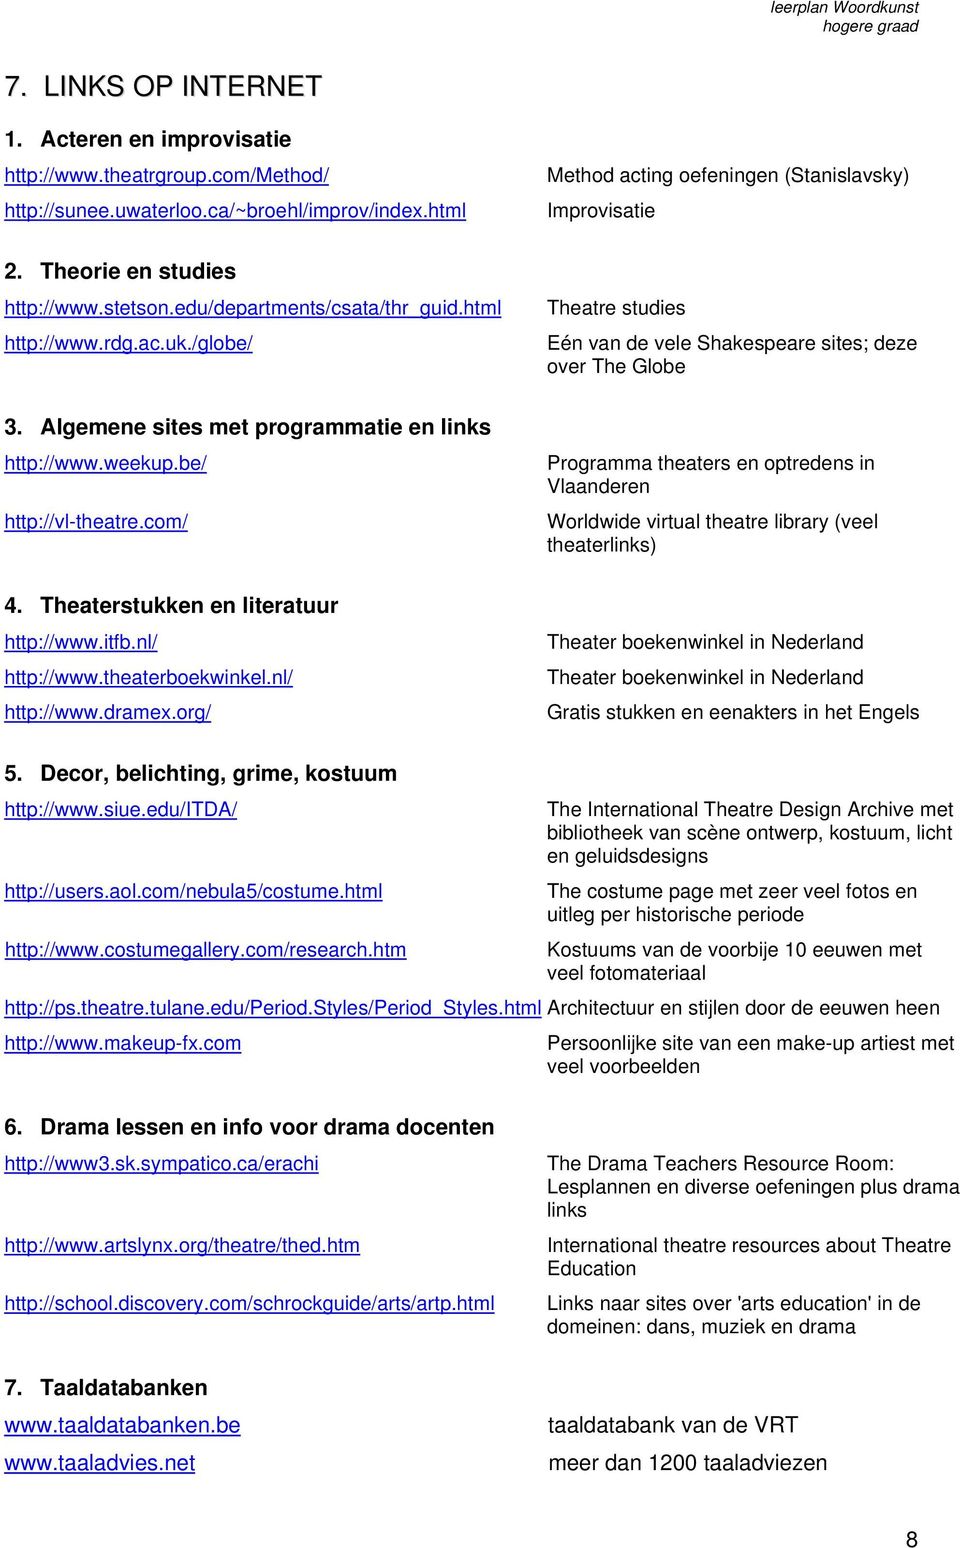 itfb.nl/ http://www.theaterboekwinkel.nl/ http://www.dramex.